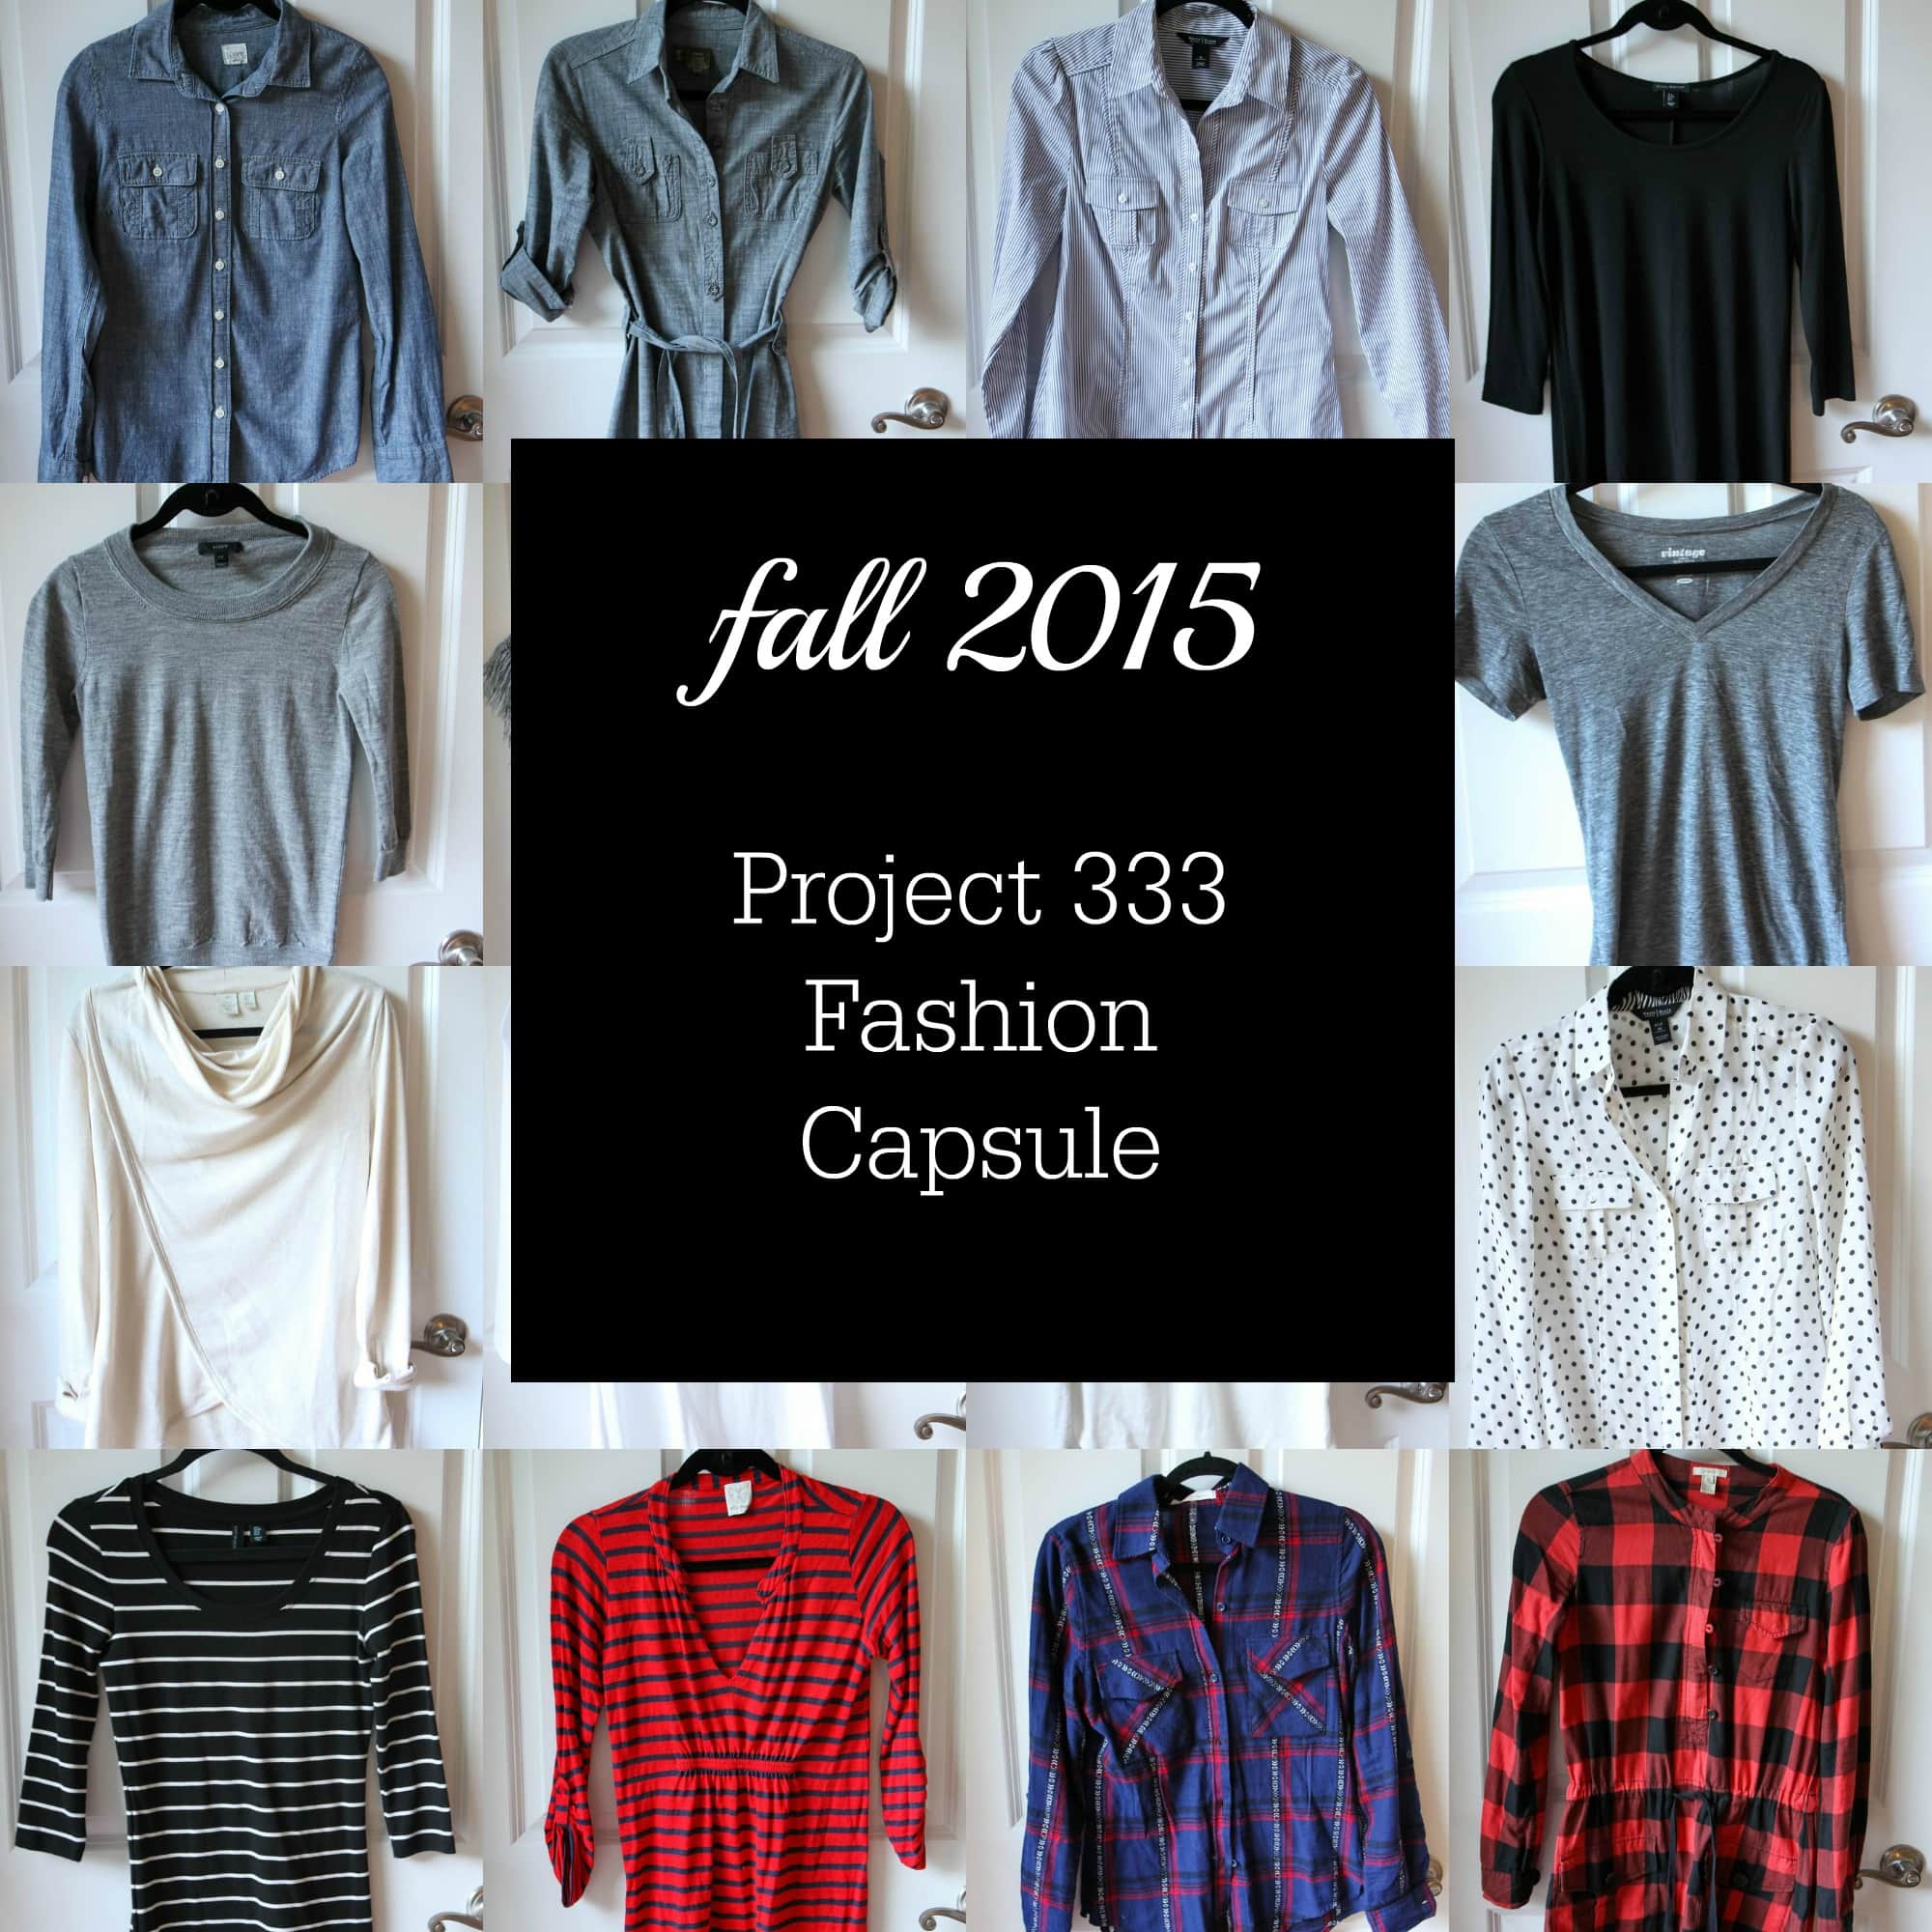 Fall 2015 Fashion Capsule Wardrobe Project